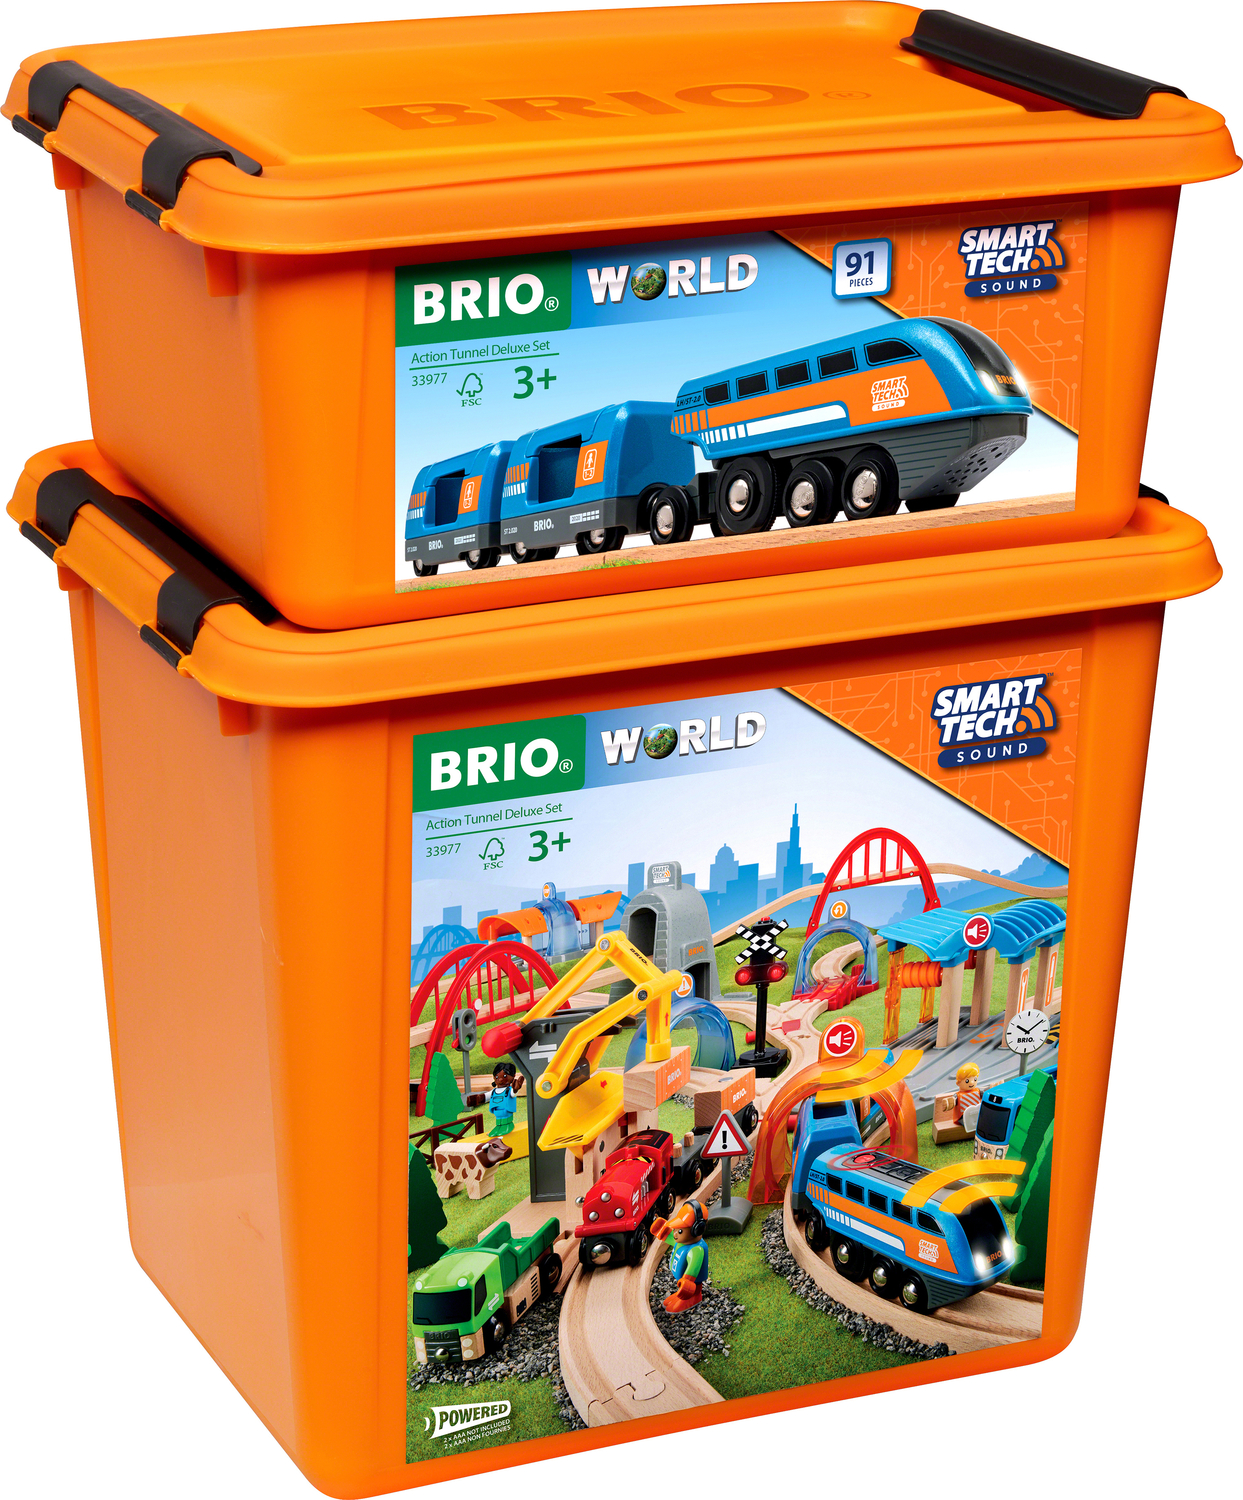 BRIO World B/O Action Train